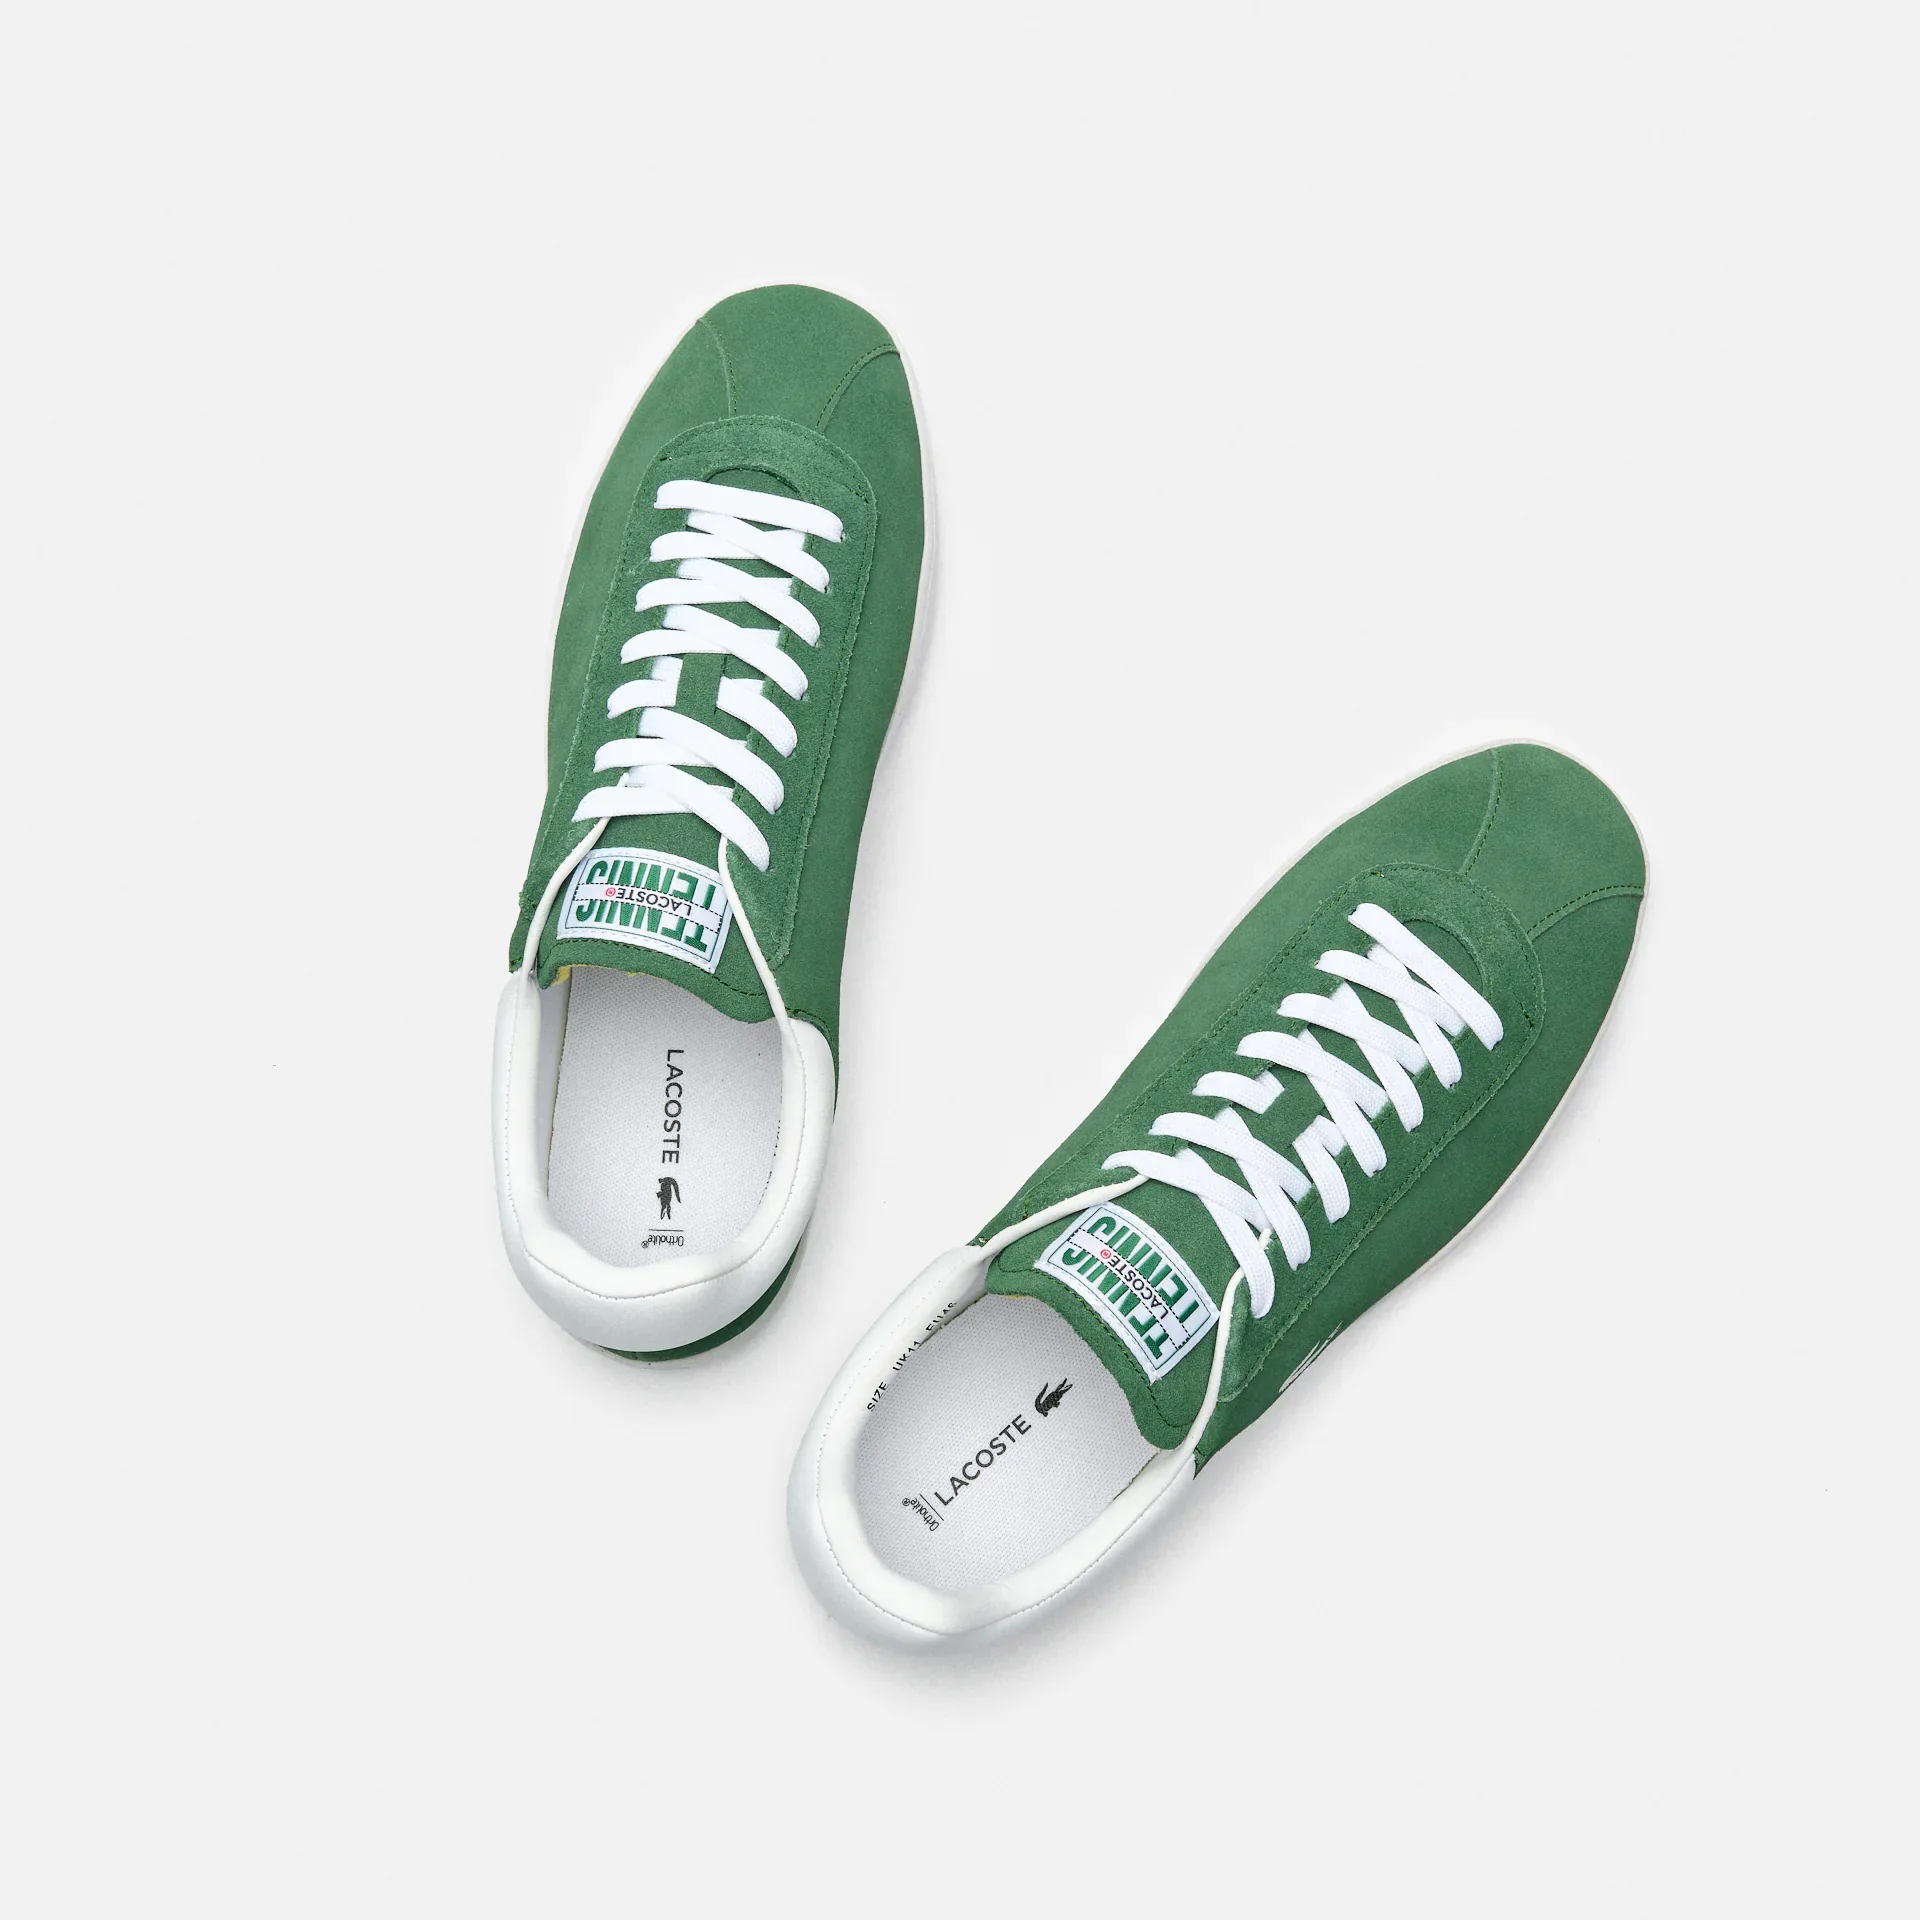 Lacoste Baseshot Leather Sneaker Dark Green/White